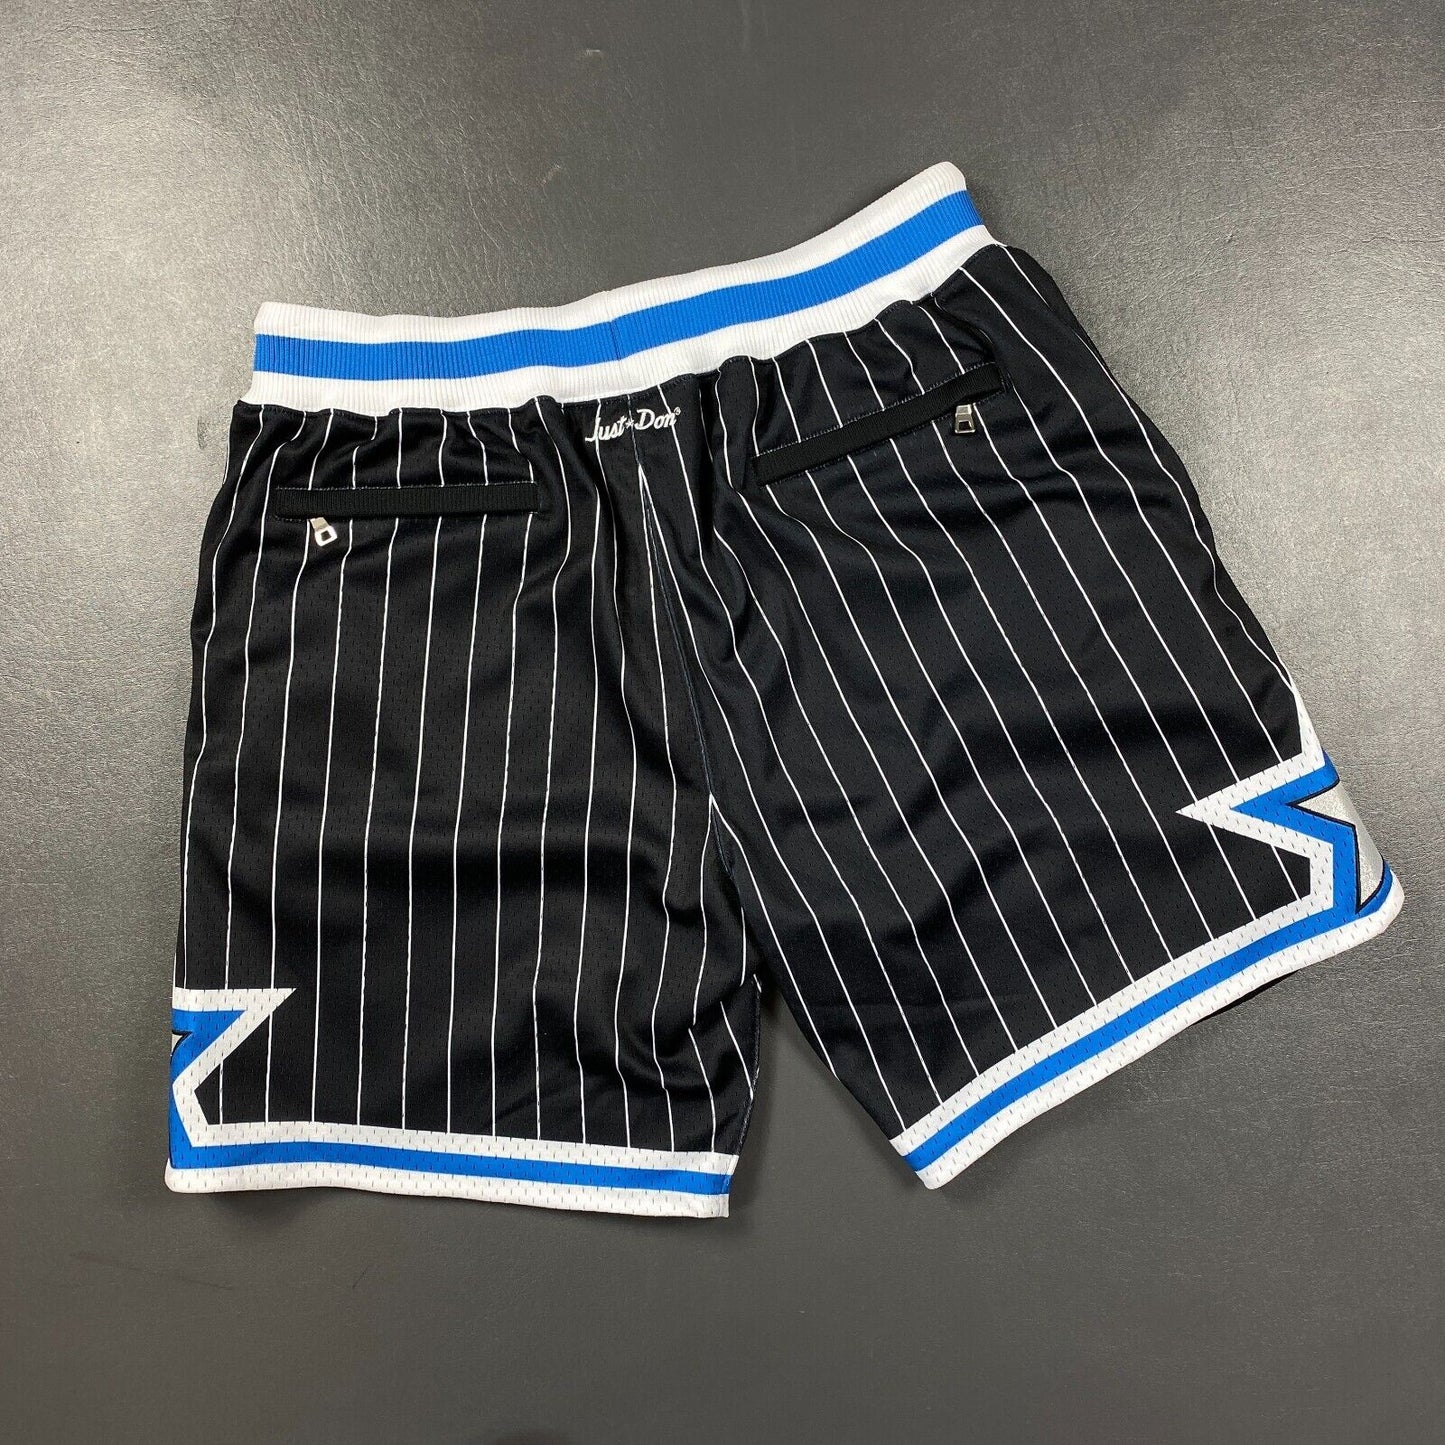 100% Authentic Just Don x Mitchell Ness 93 94 Orlando Magic HWC Shorts Size XL